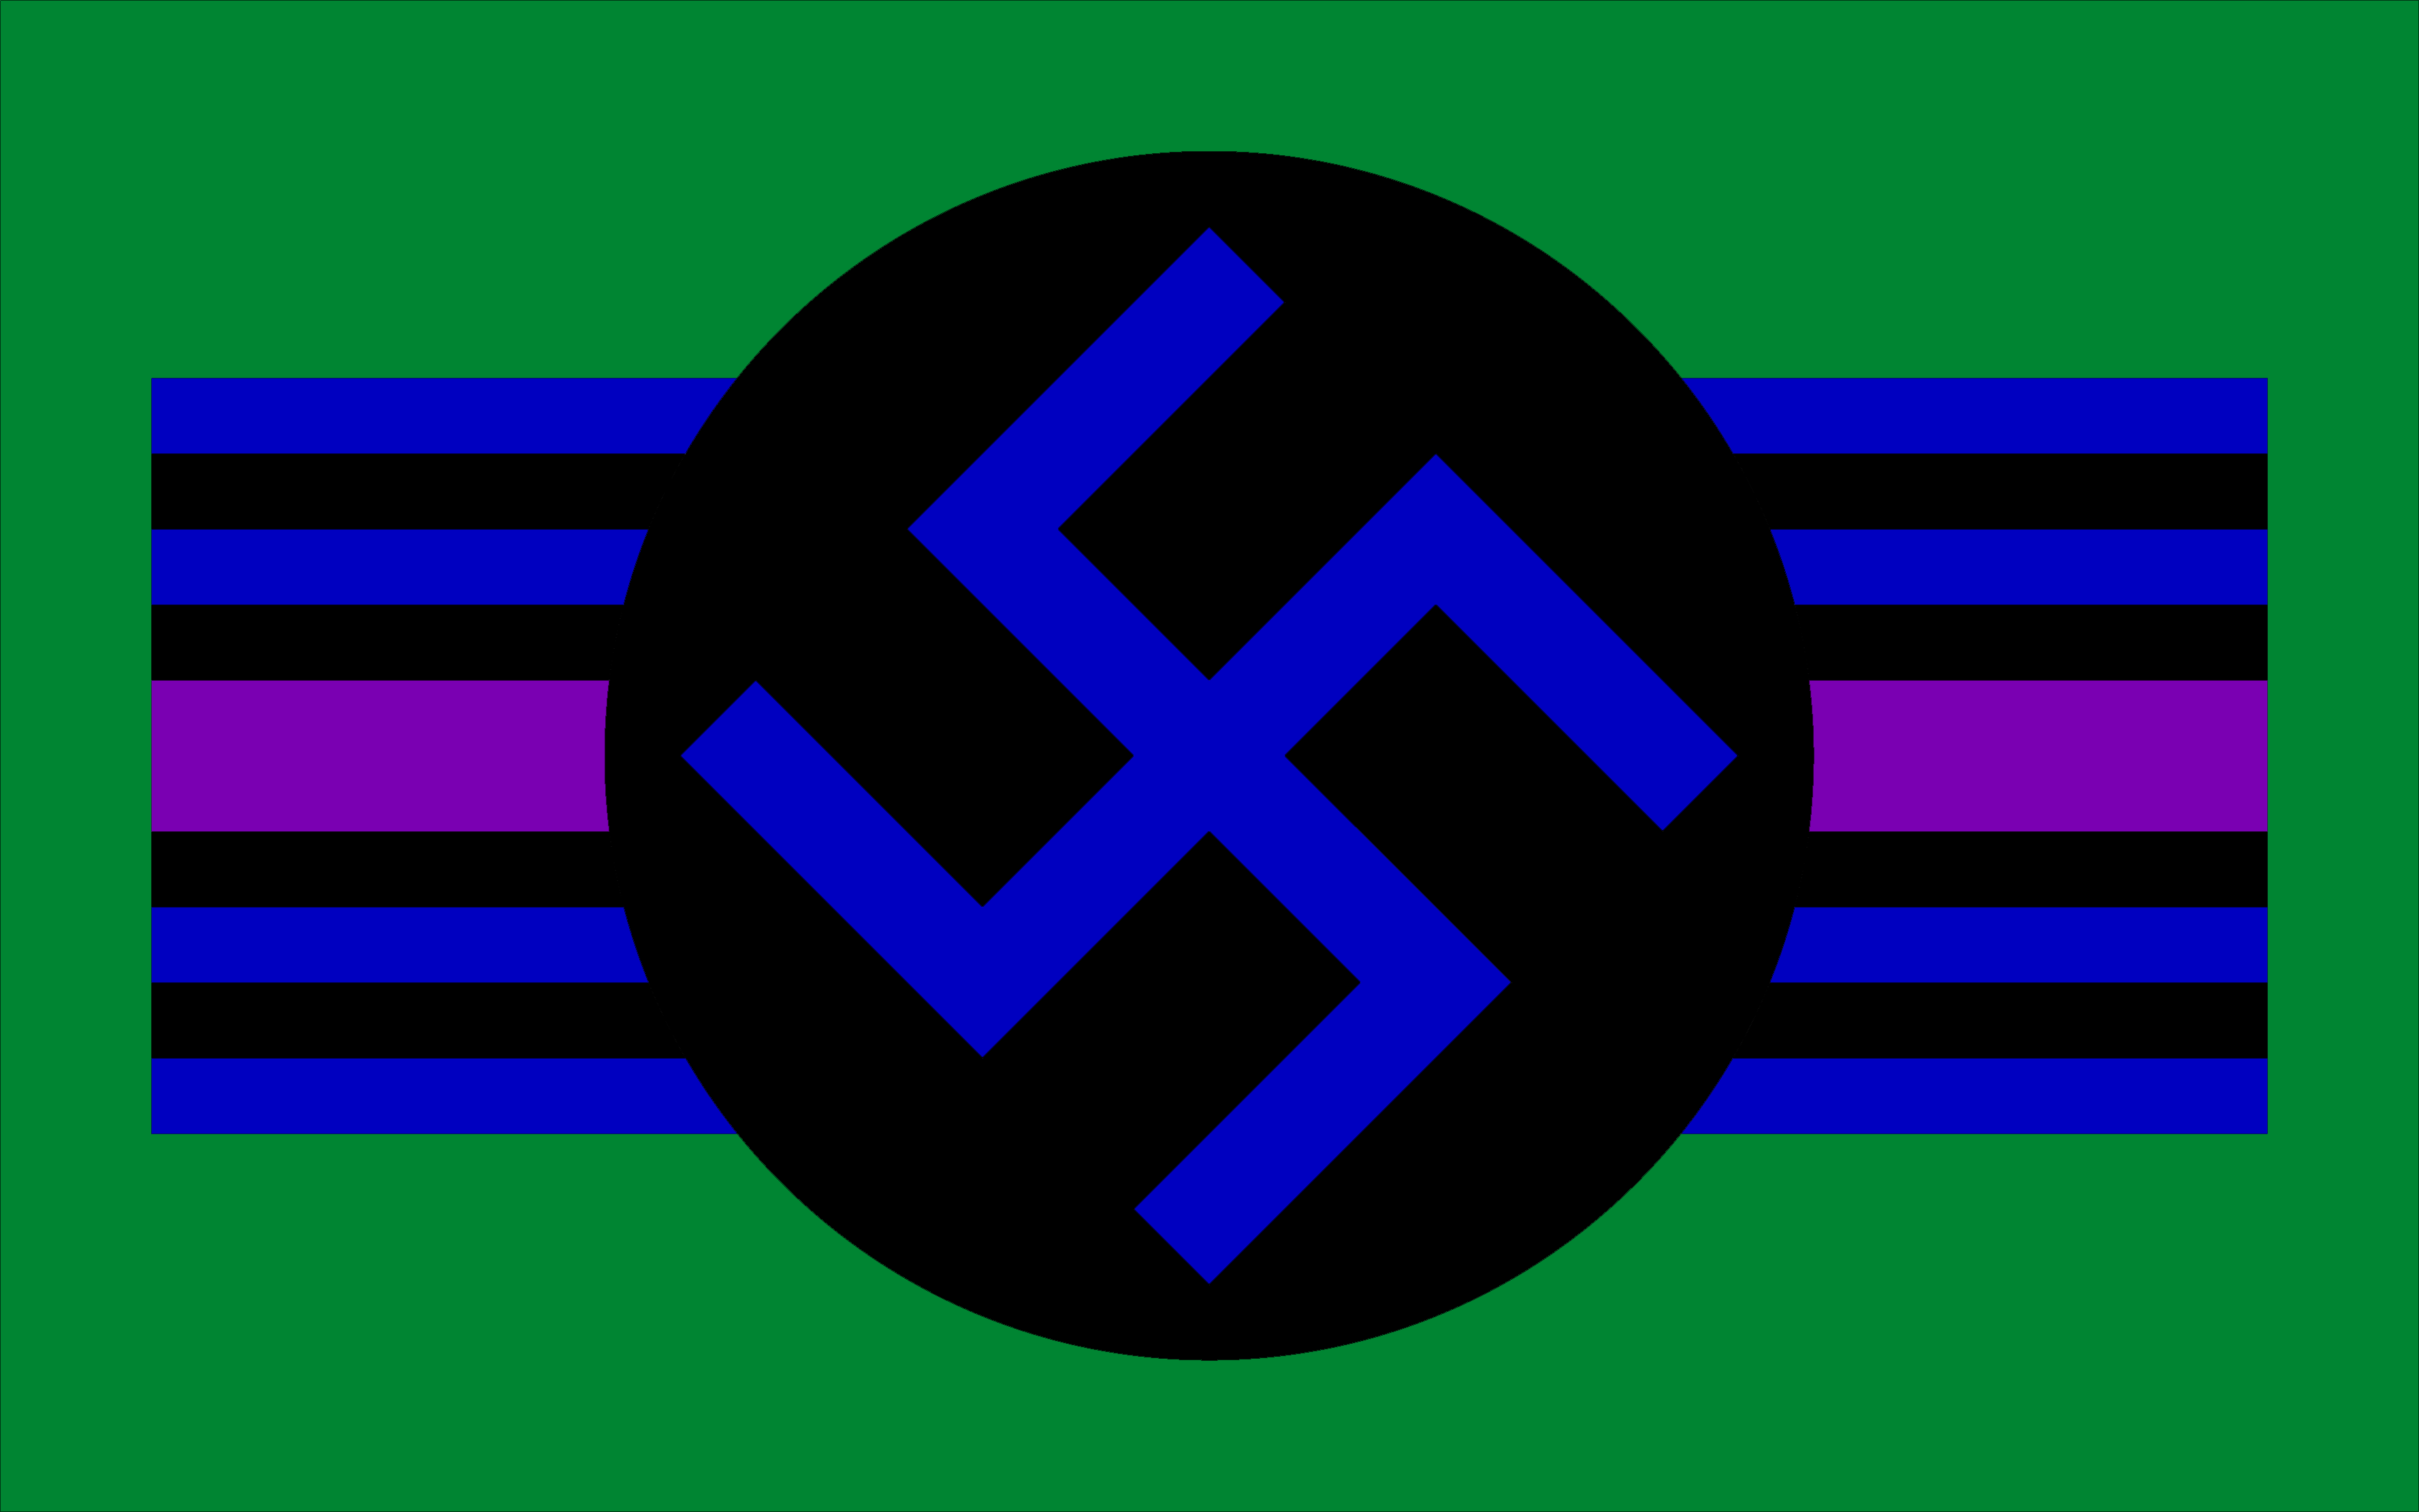 Free World Alliance Flag, Viacad Empire Flag